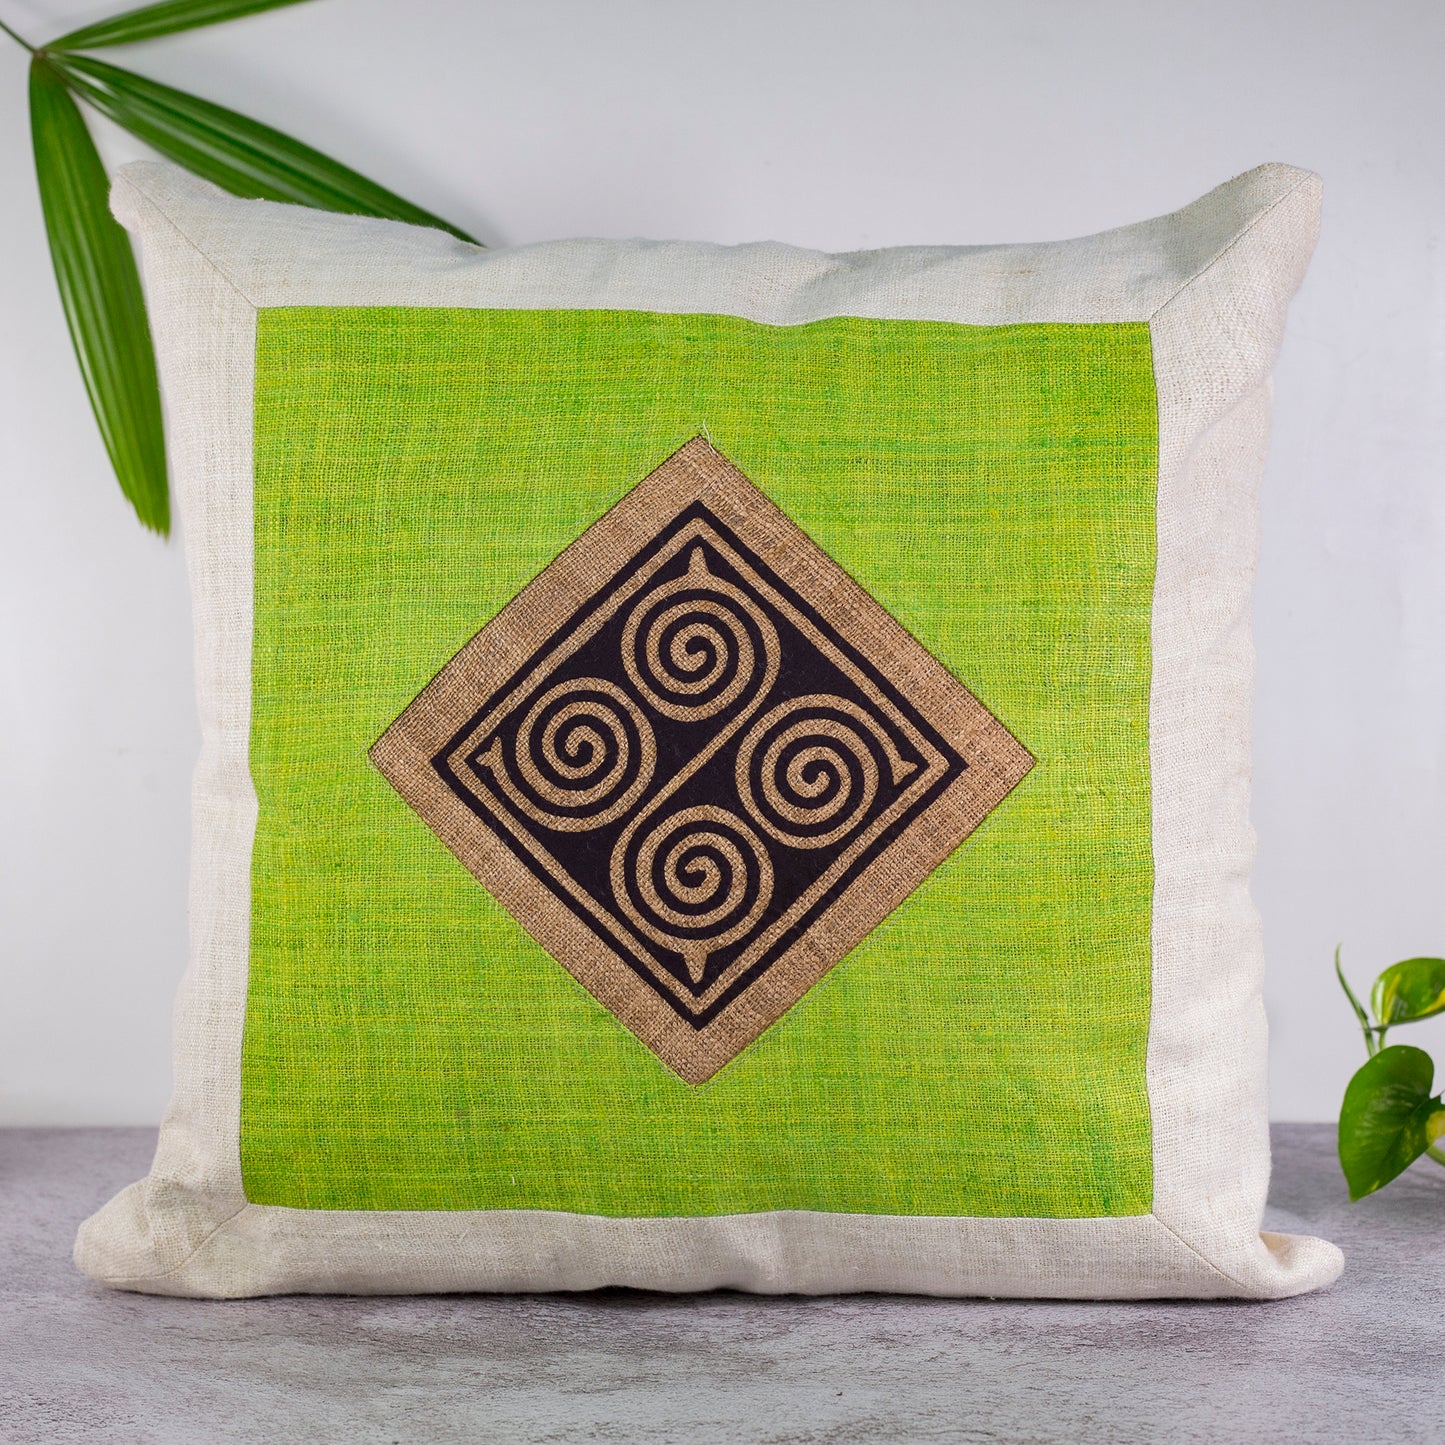 Hemp Cushion Cover in Beige- 100% handmade, green hemp, black and brown pattern at center